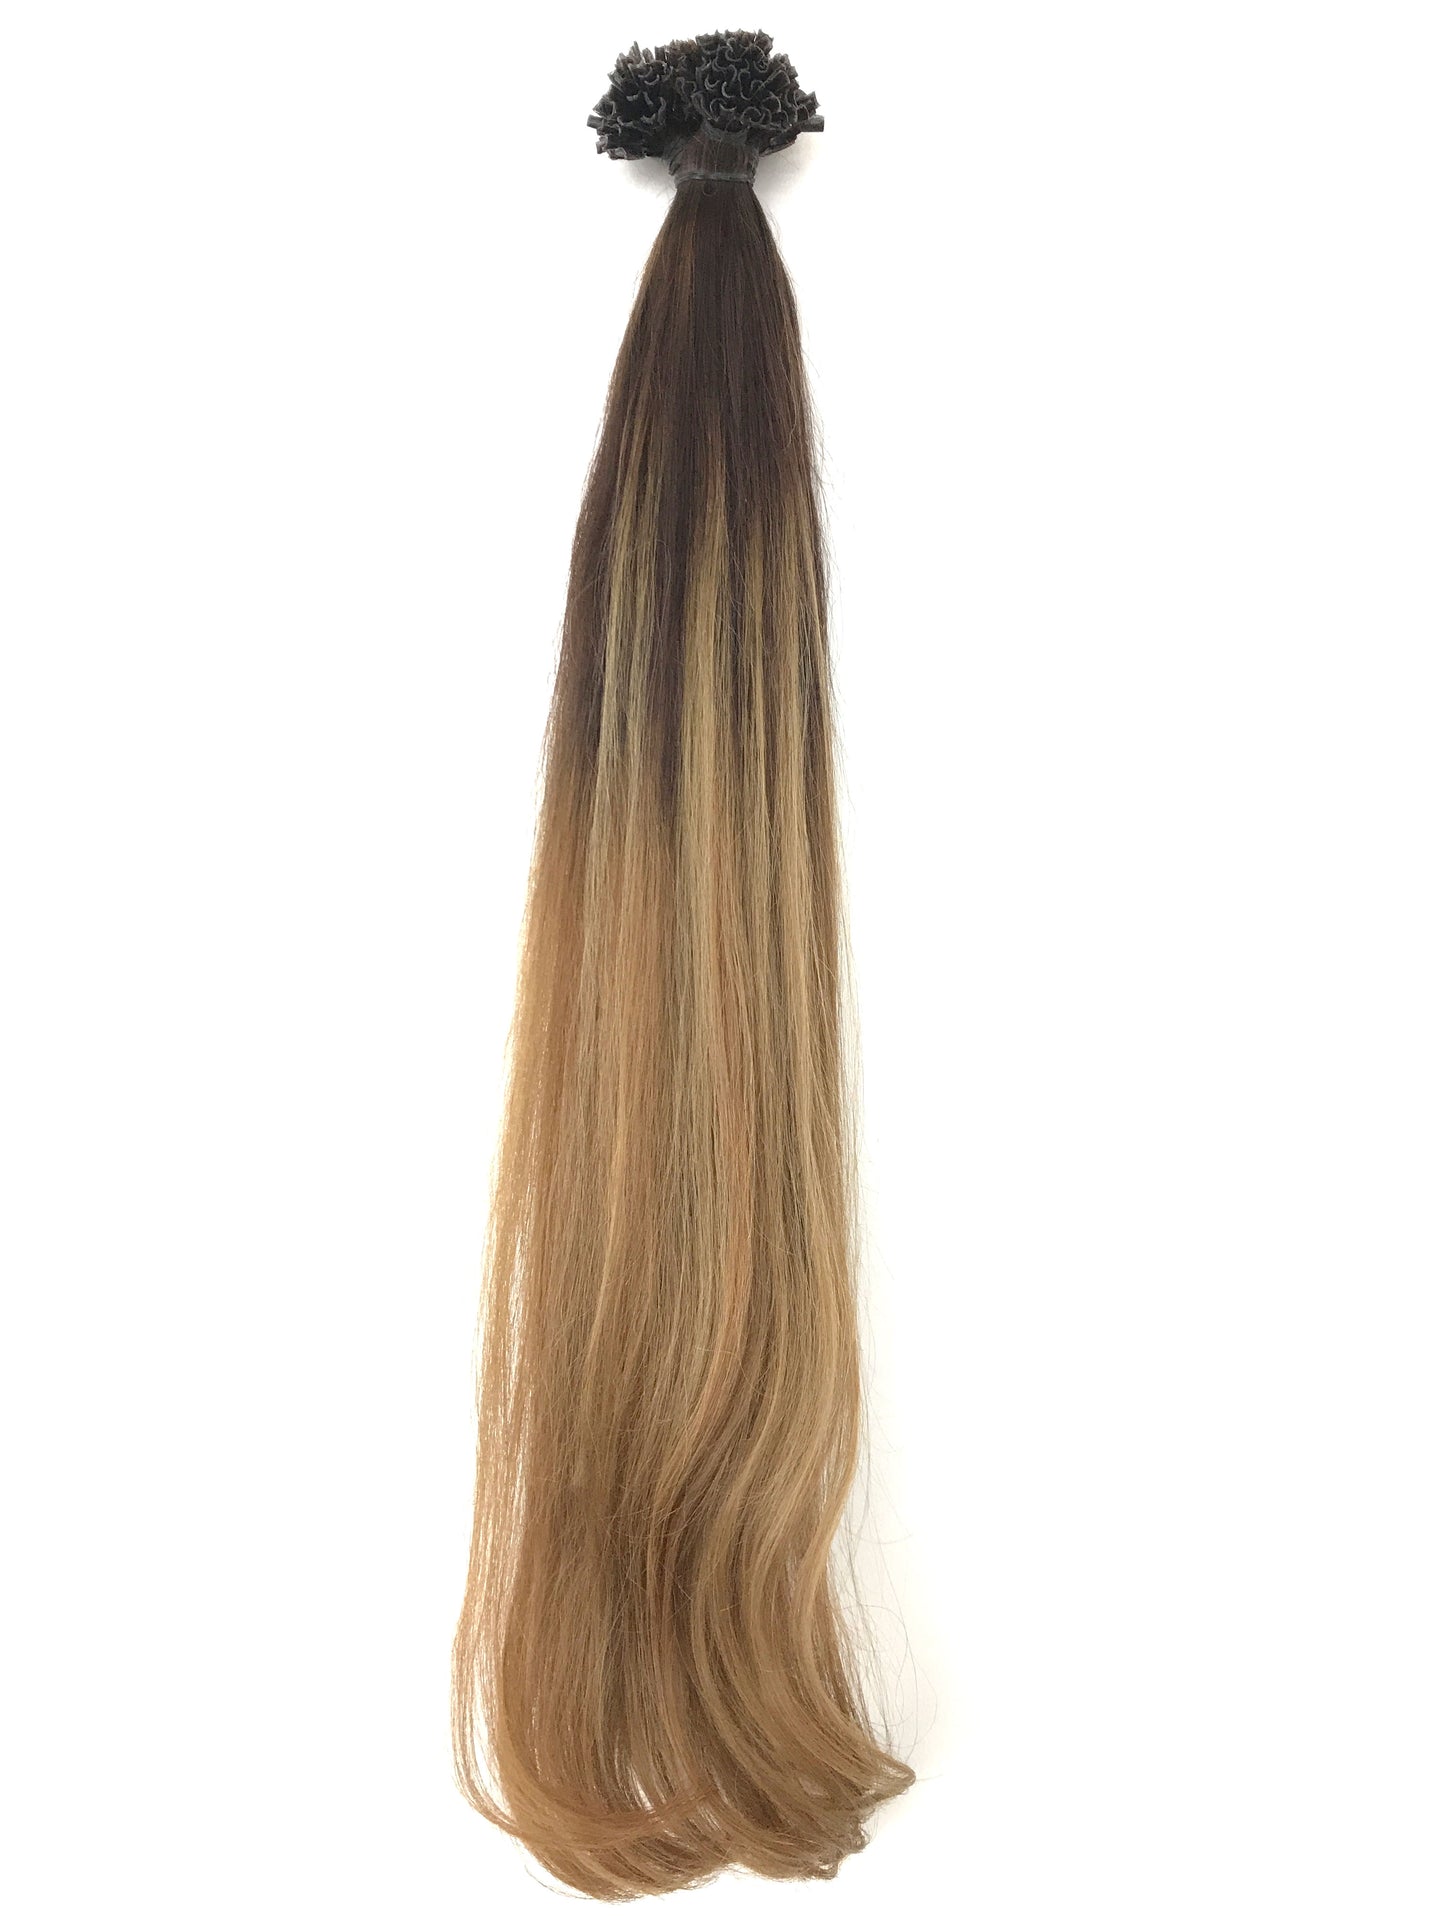 European Balayage Ombre Hair Extensions-Virgin Hair & Beauty, The Best Hair Extensions, Real Virgin Human Hair.